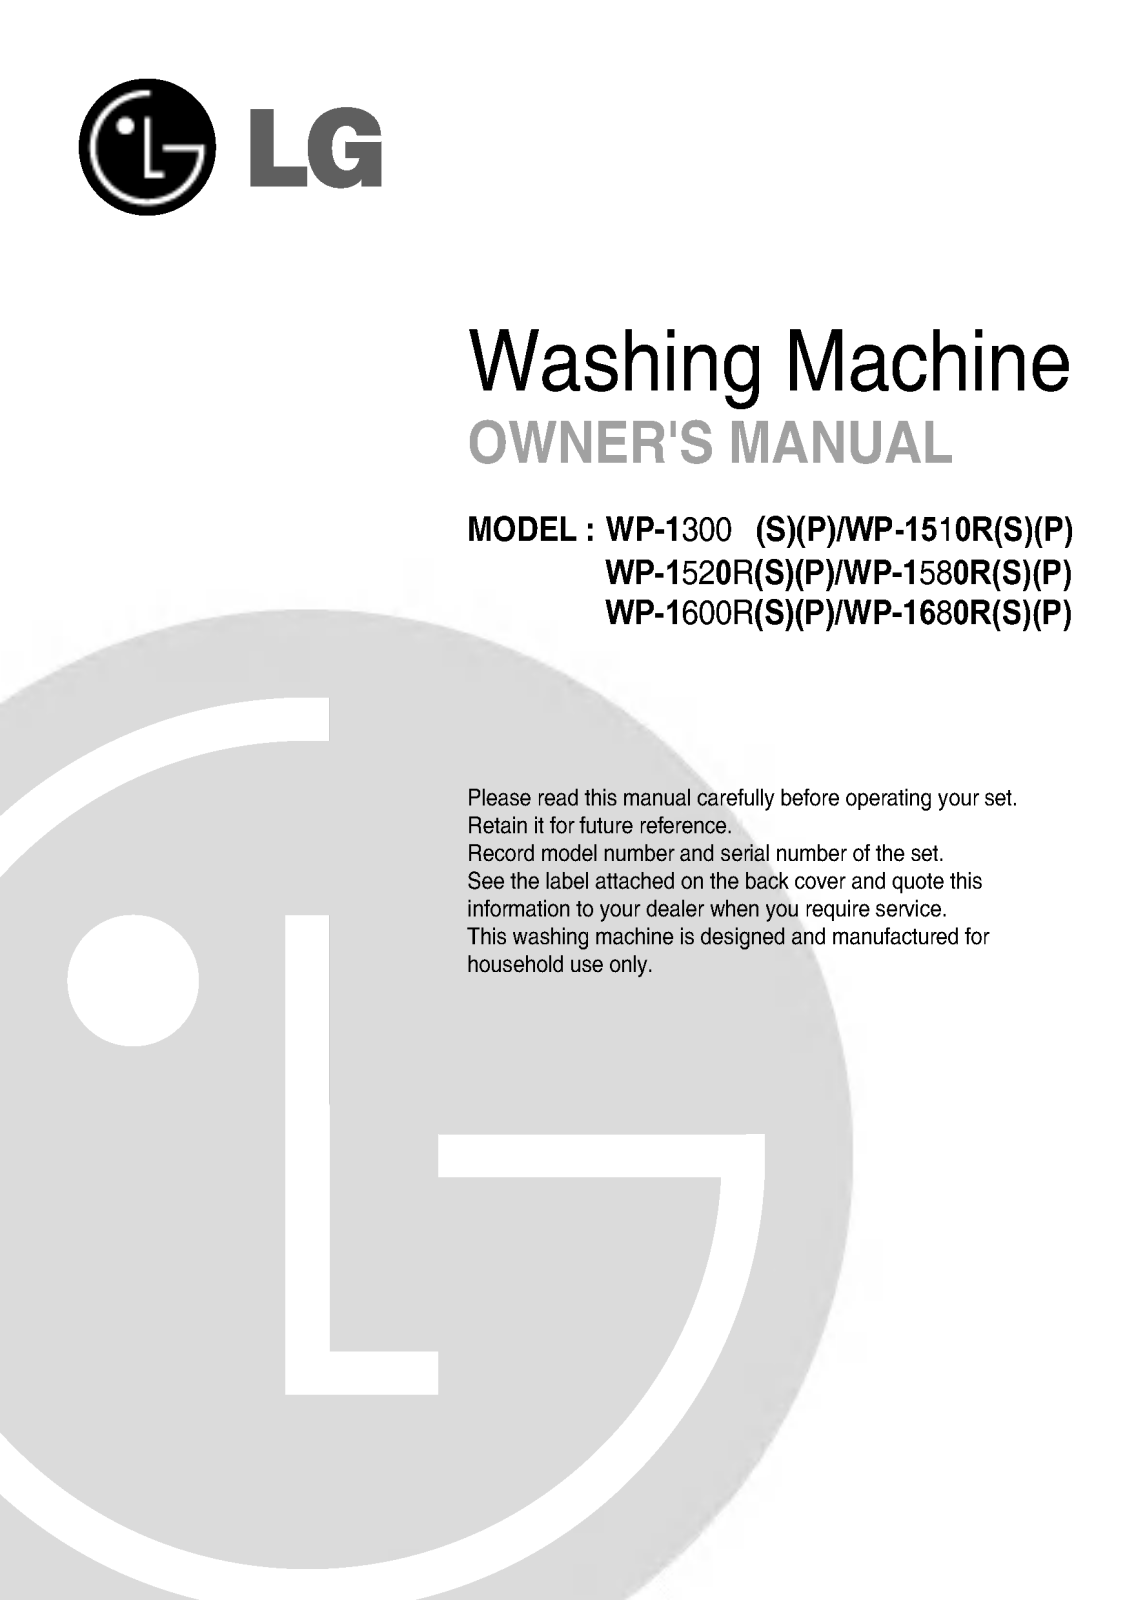 LG WP-1600RSP Owner’s Manual